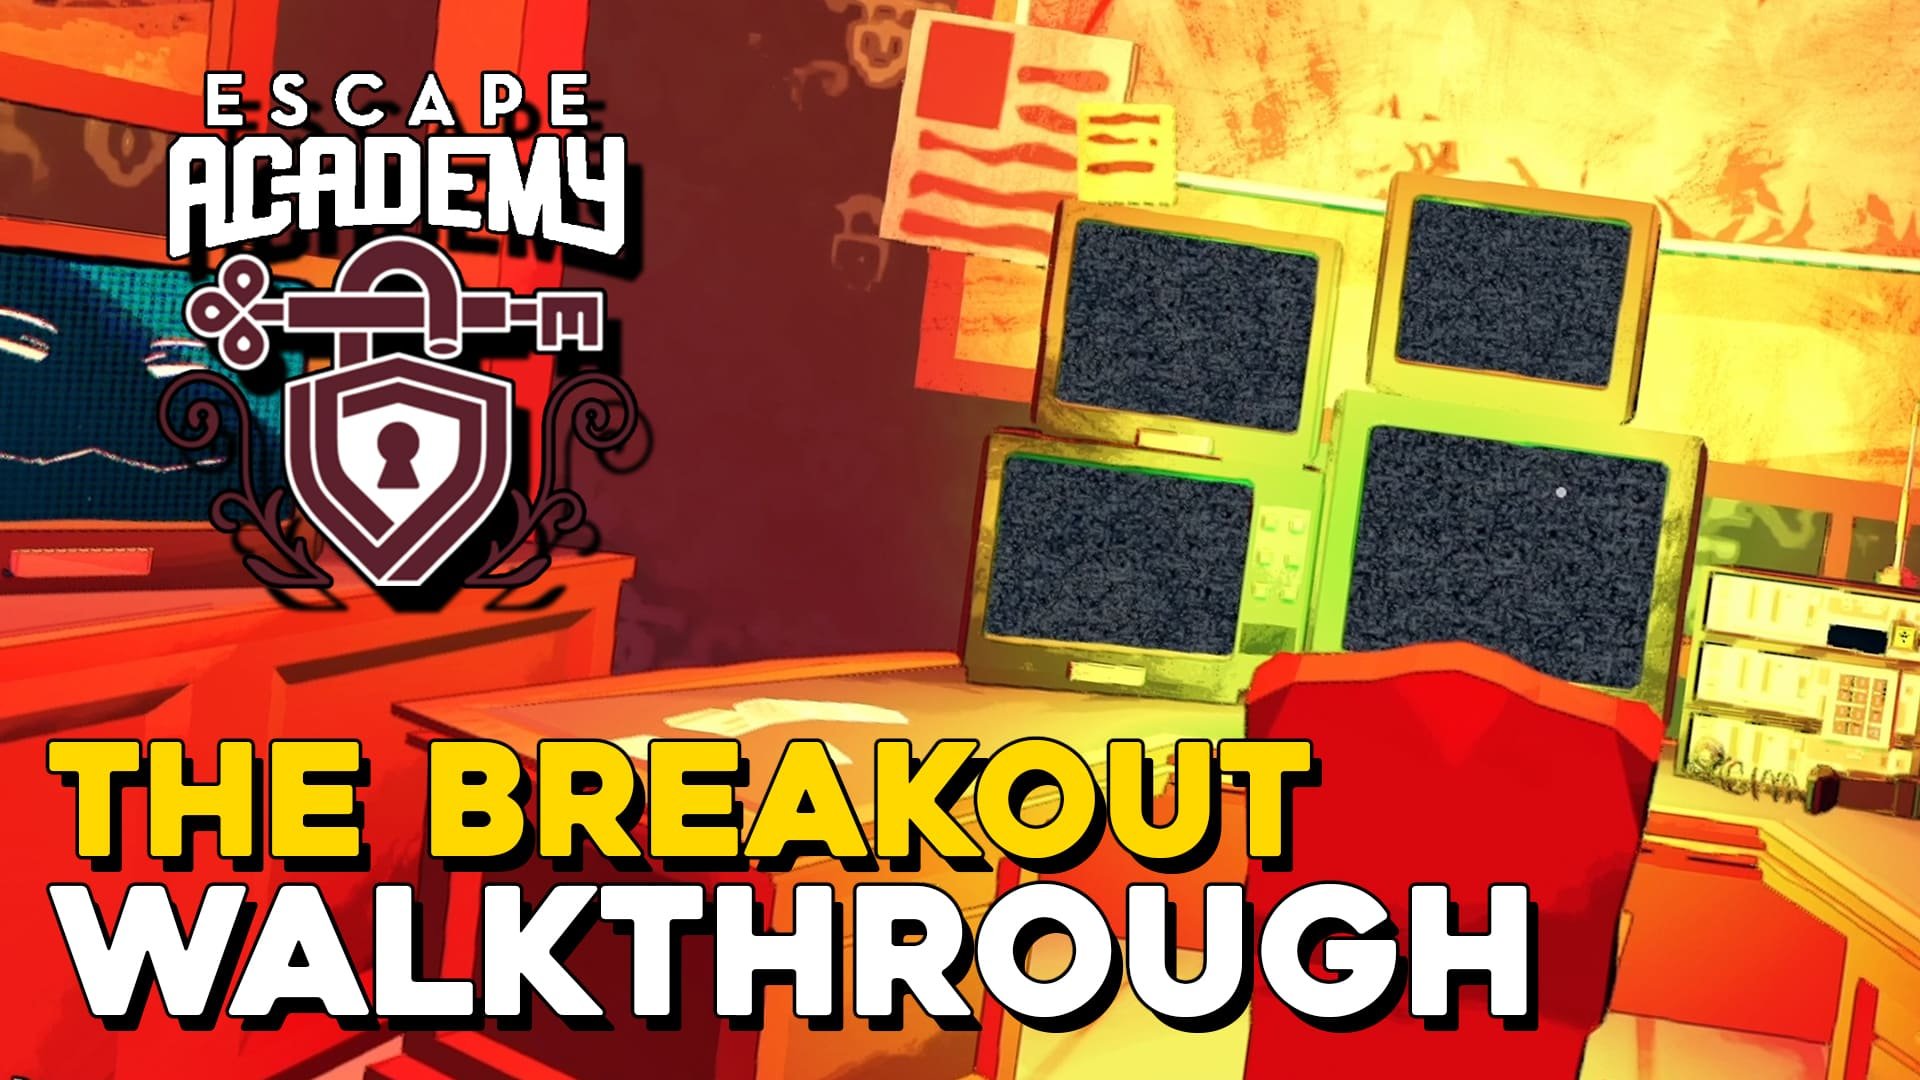 Escape Academy The Breakout Walkthrough (copia) (copia) (Copy)